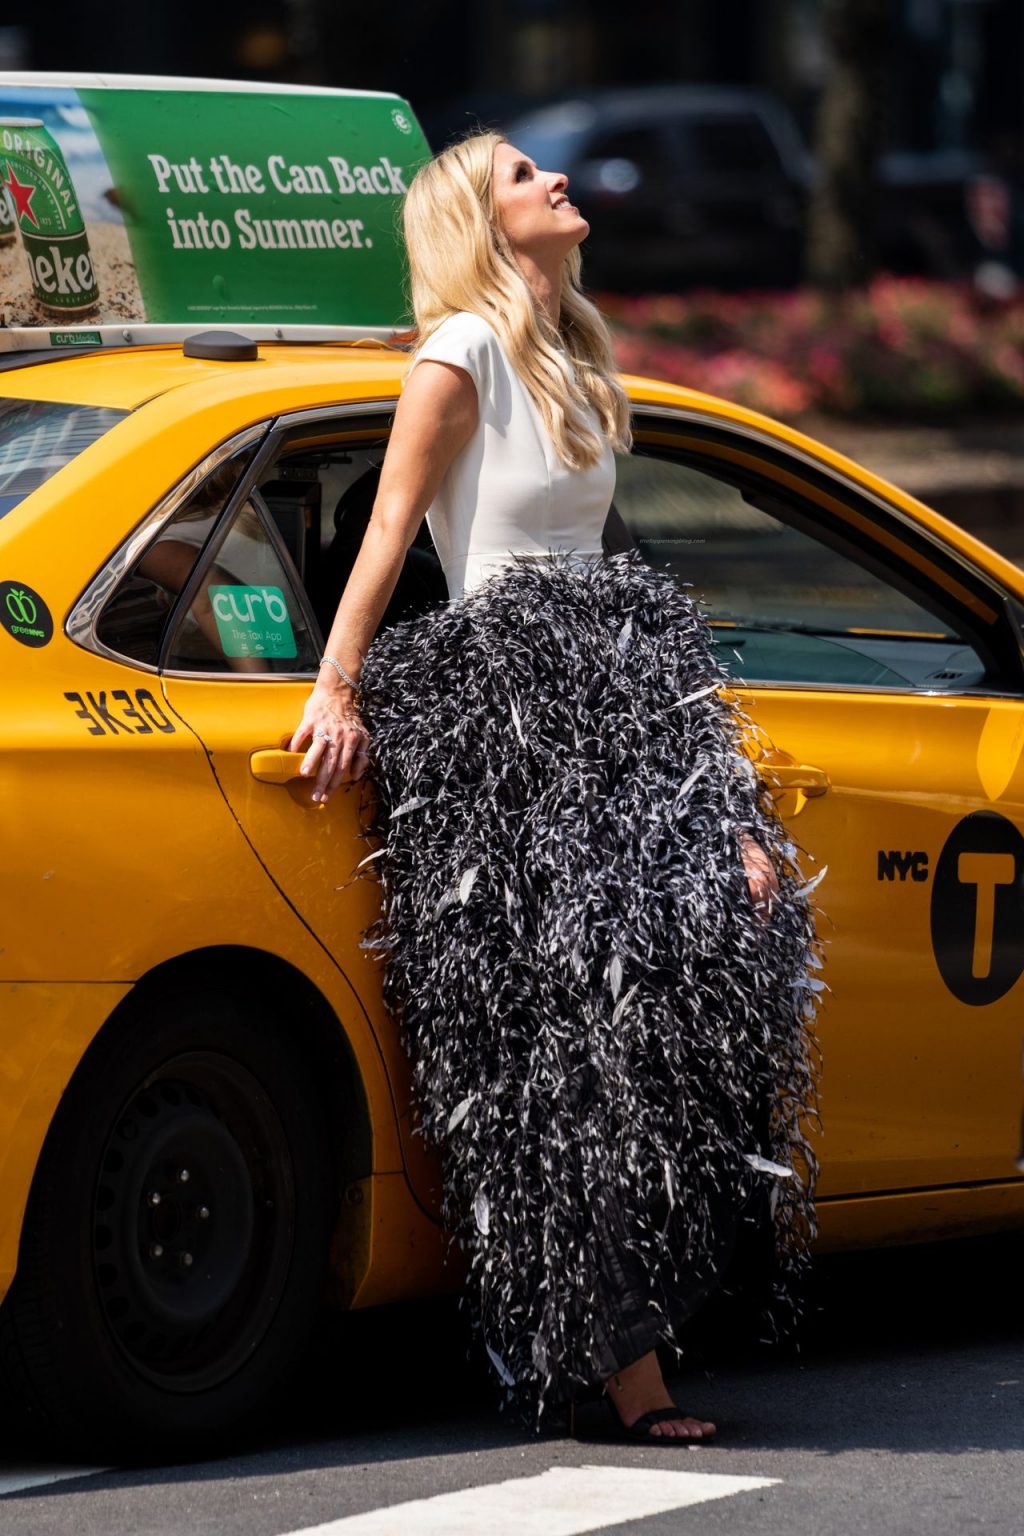 Nicky Hilton Shows Her Pokies in NYC (13 Photos)